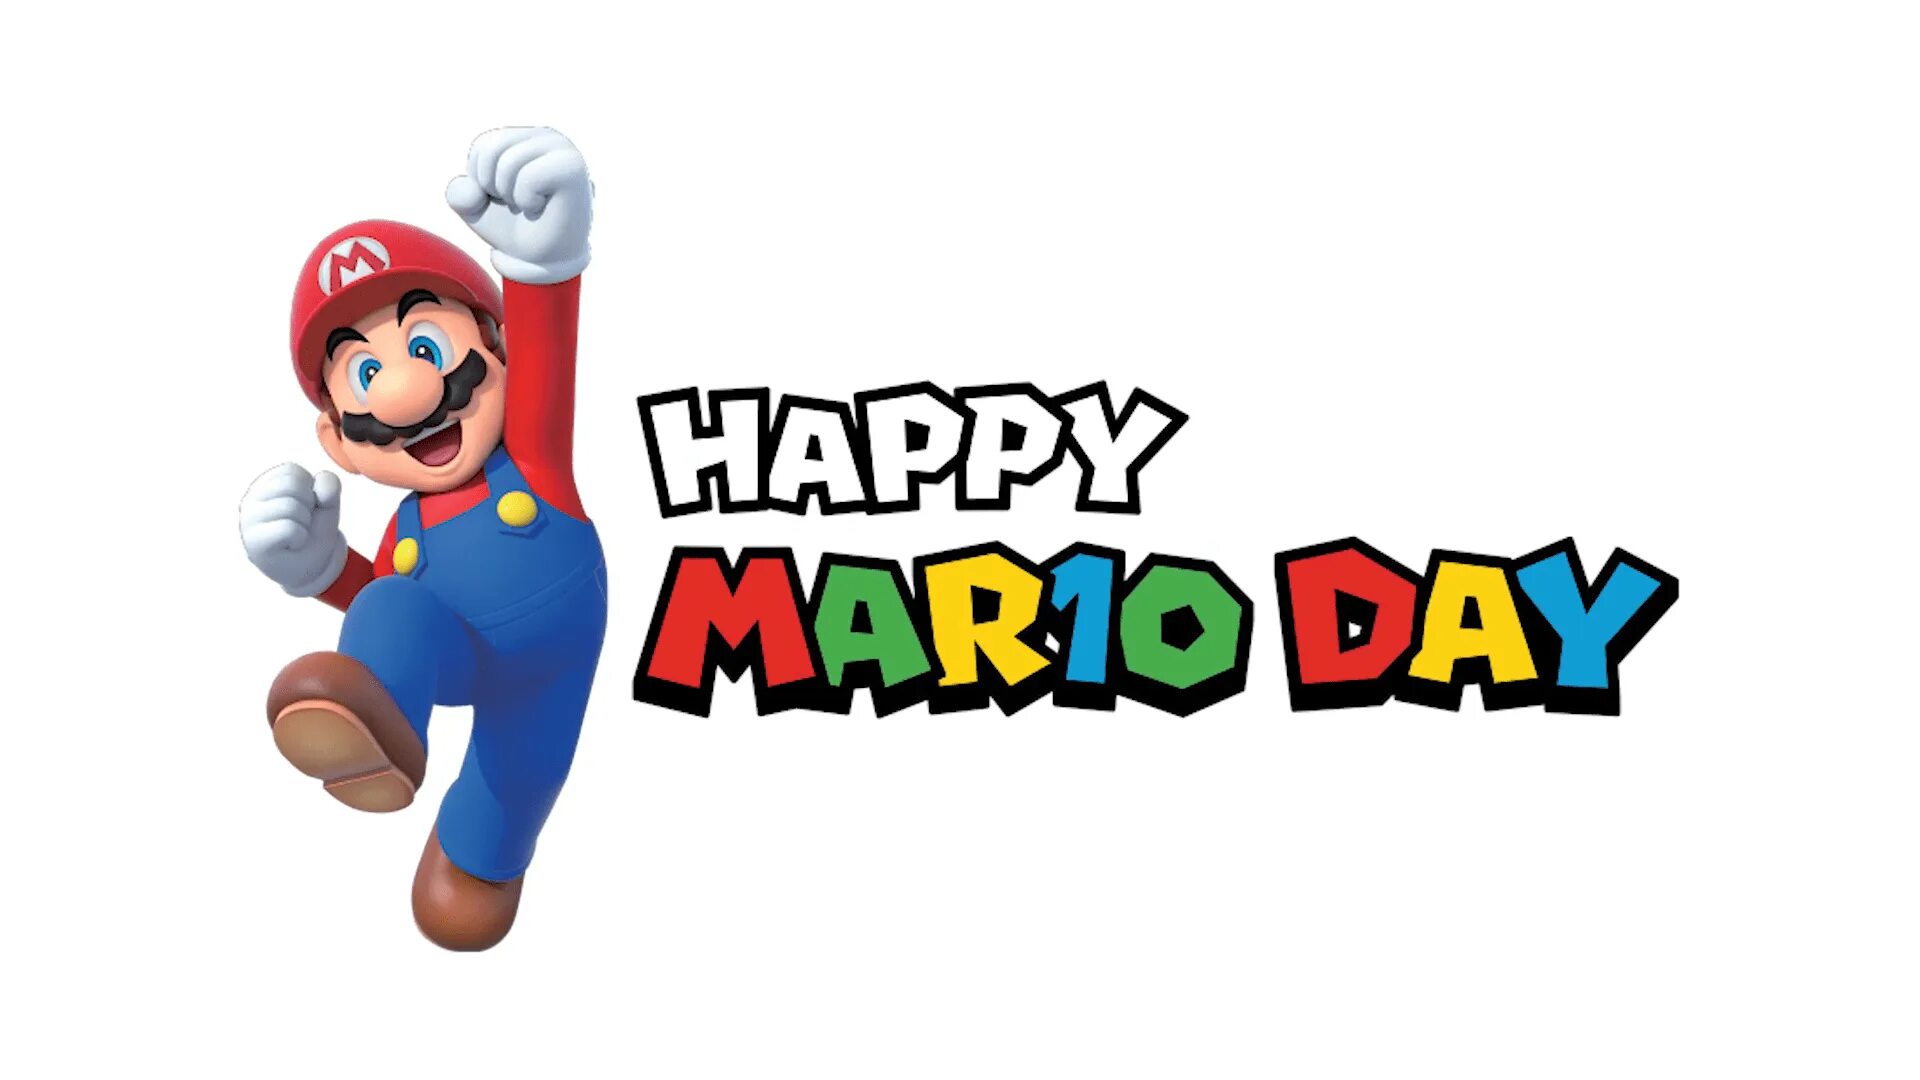 Mario day. День Марио (mar10 Day). Хэппи Марио. Хэппи мод супер Марио.